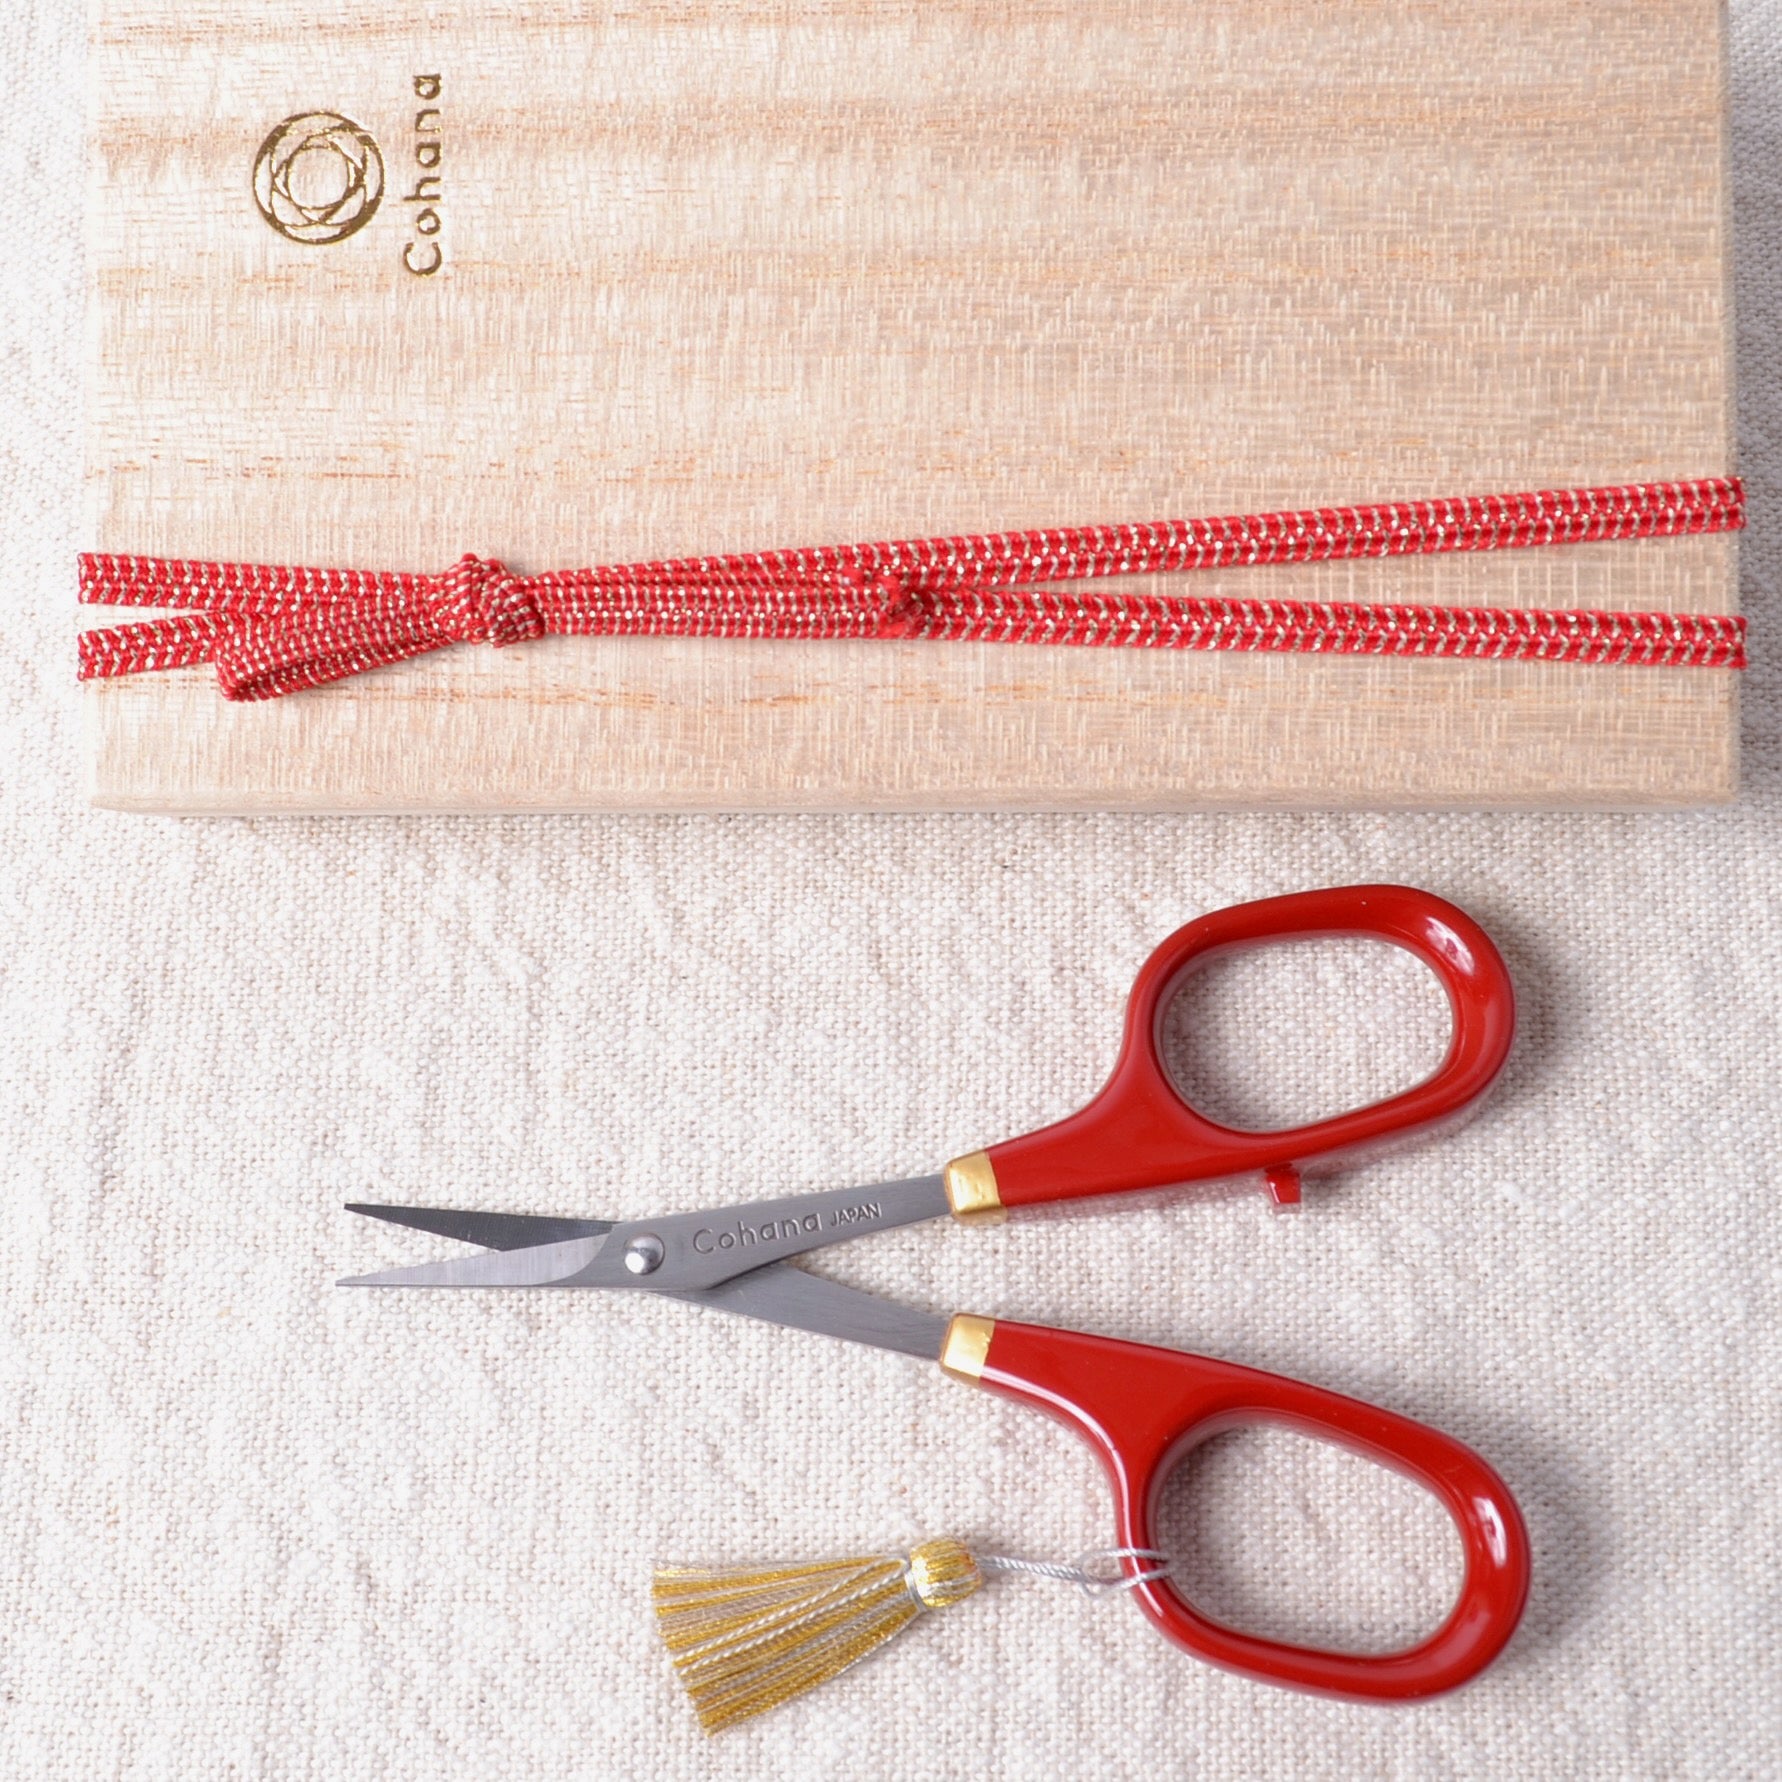 Cohana red lacquer scissors come in wooden box